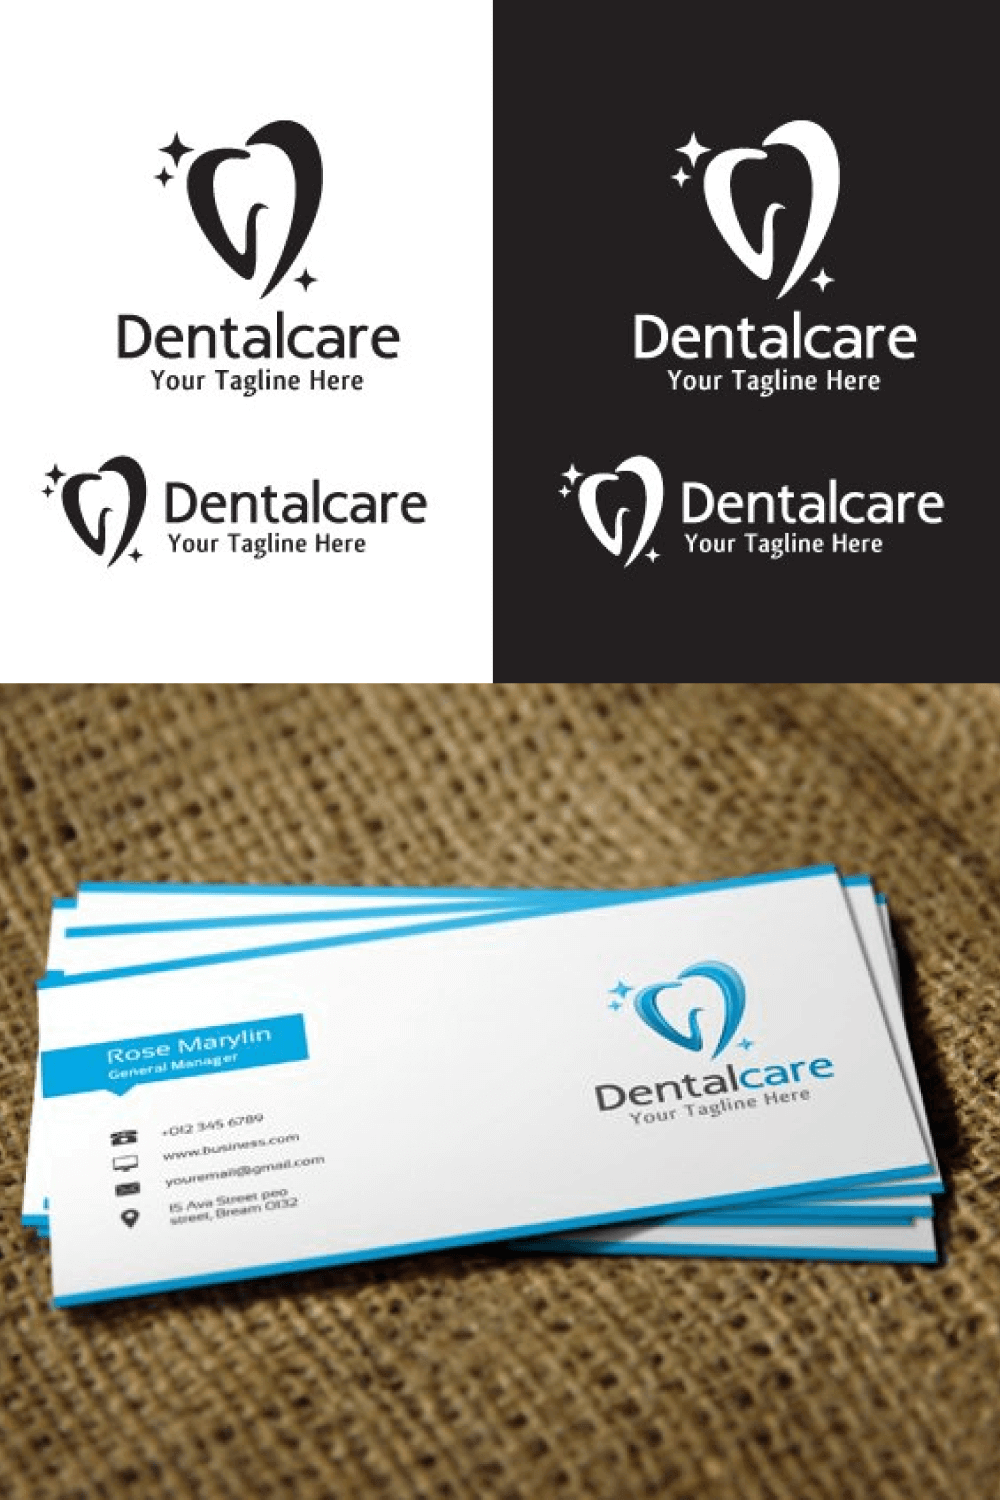 Using Dentalcare Logo.